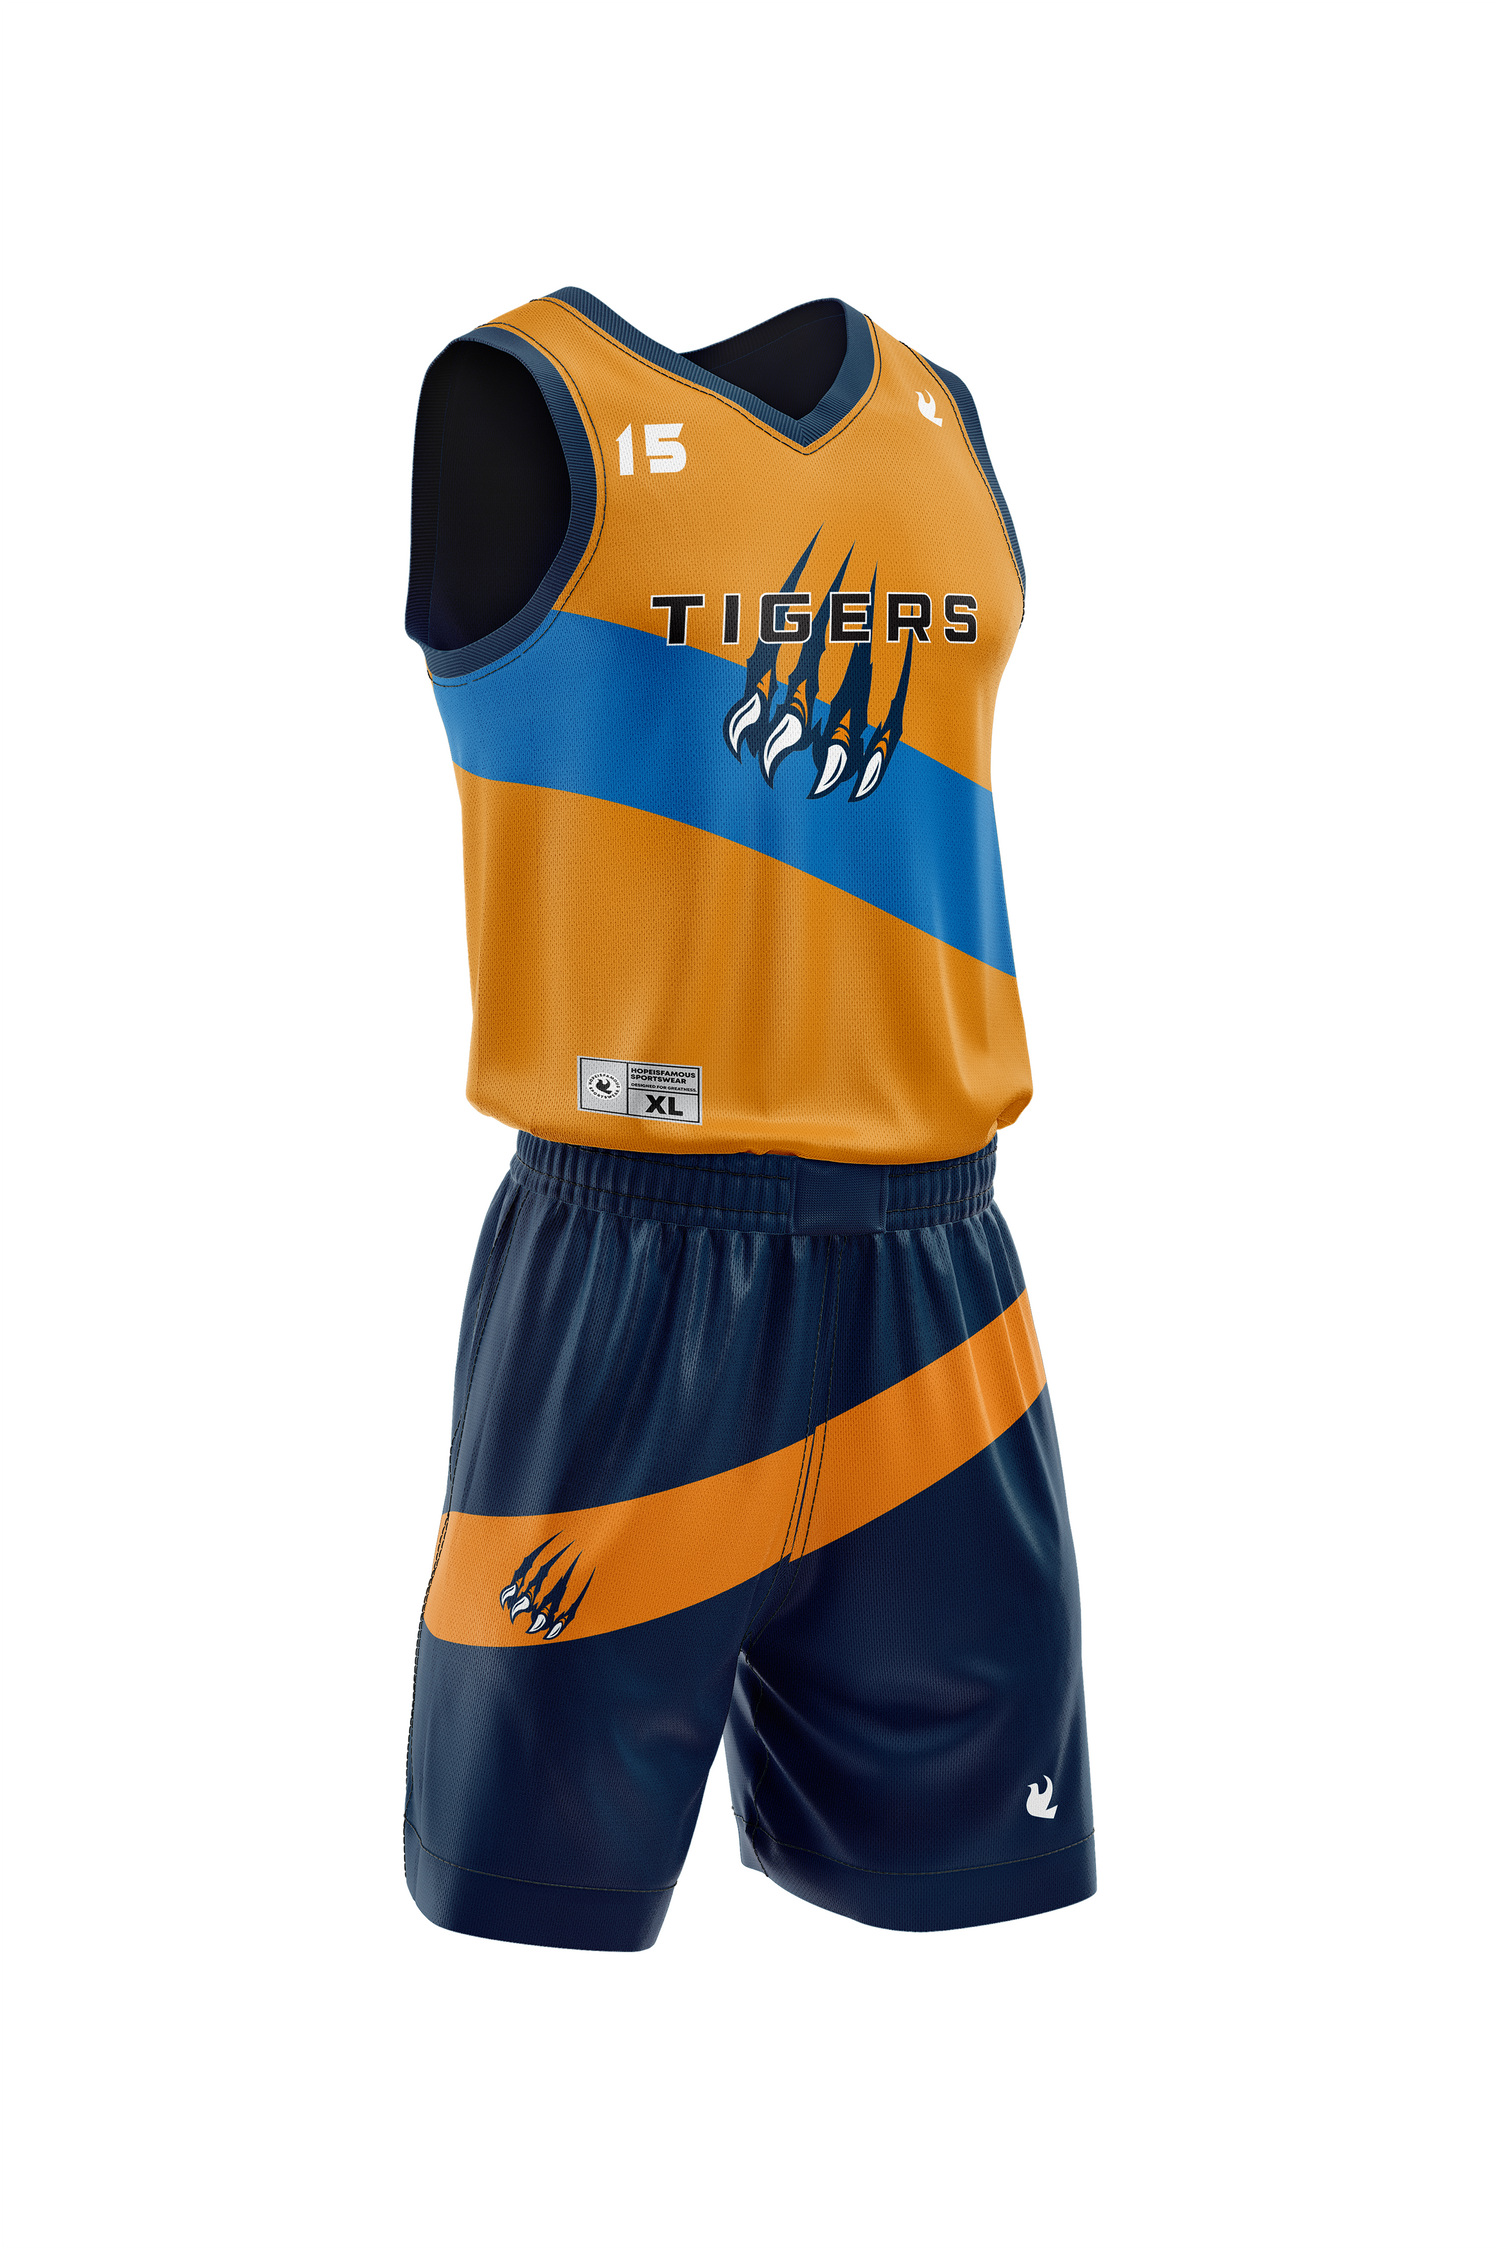 M-Power Basketball Uniform: Tigers